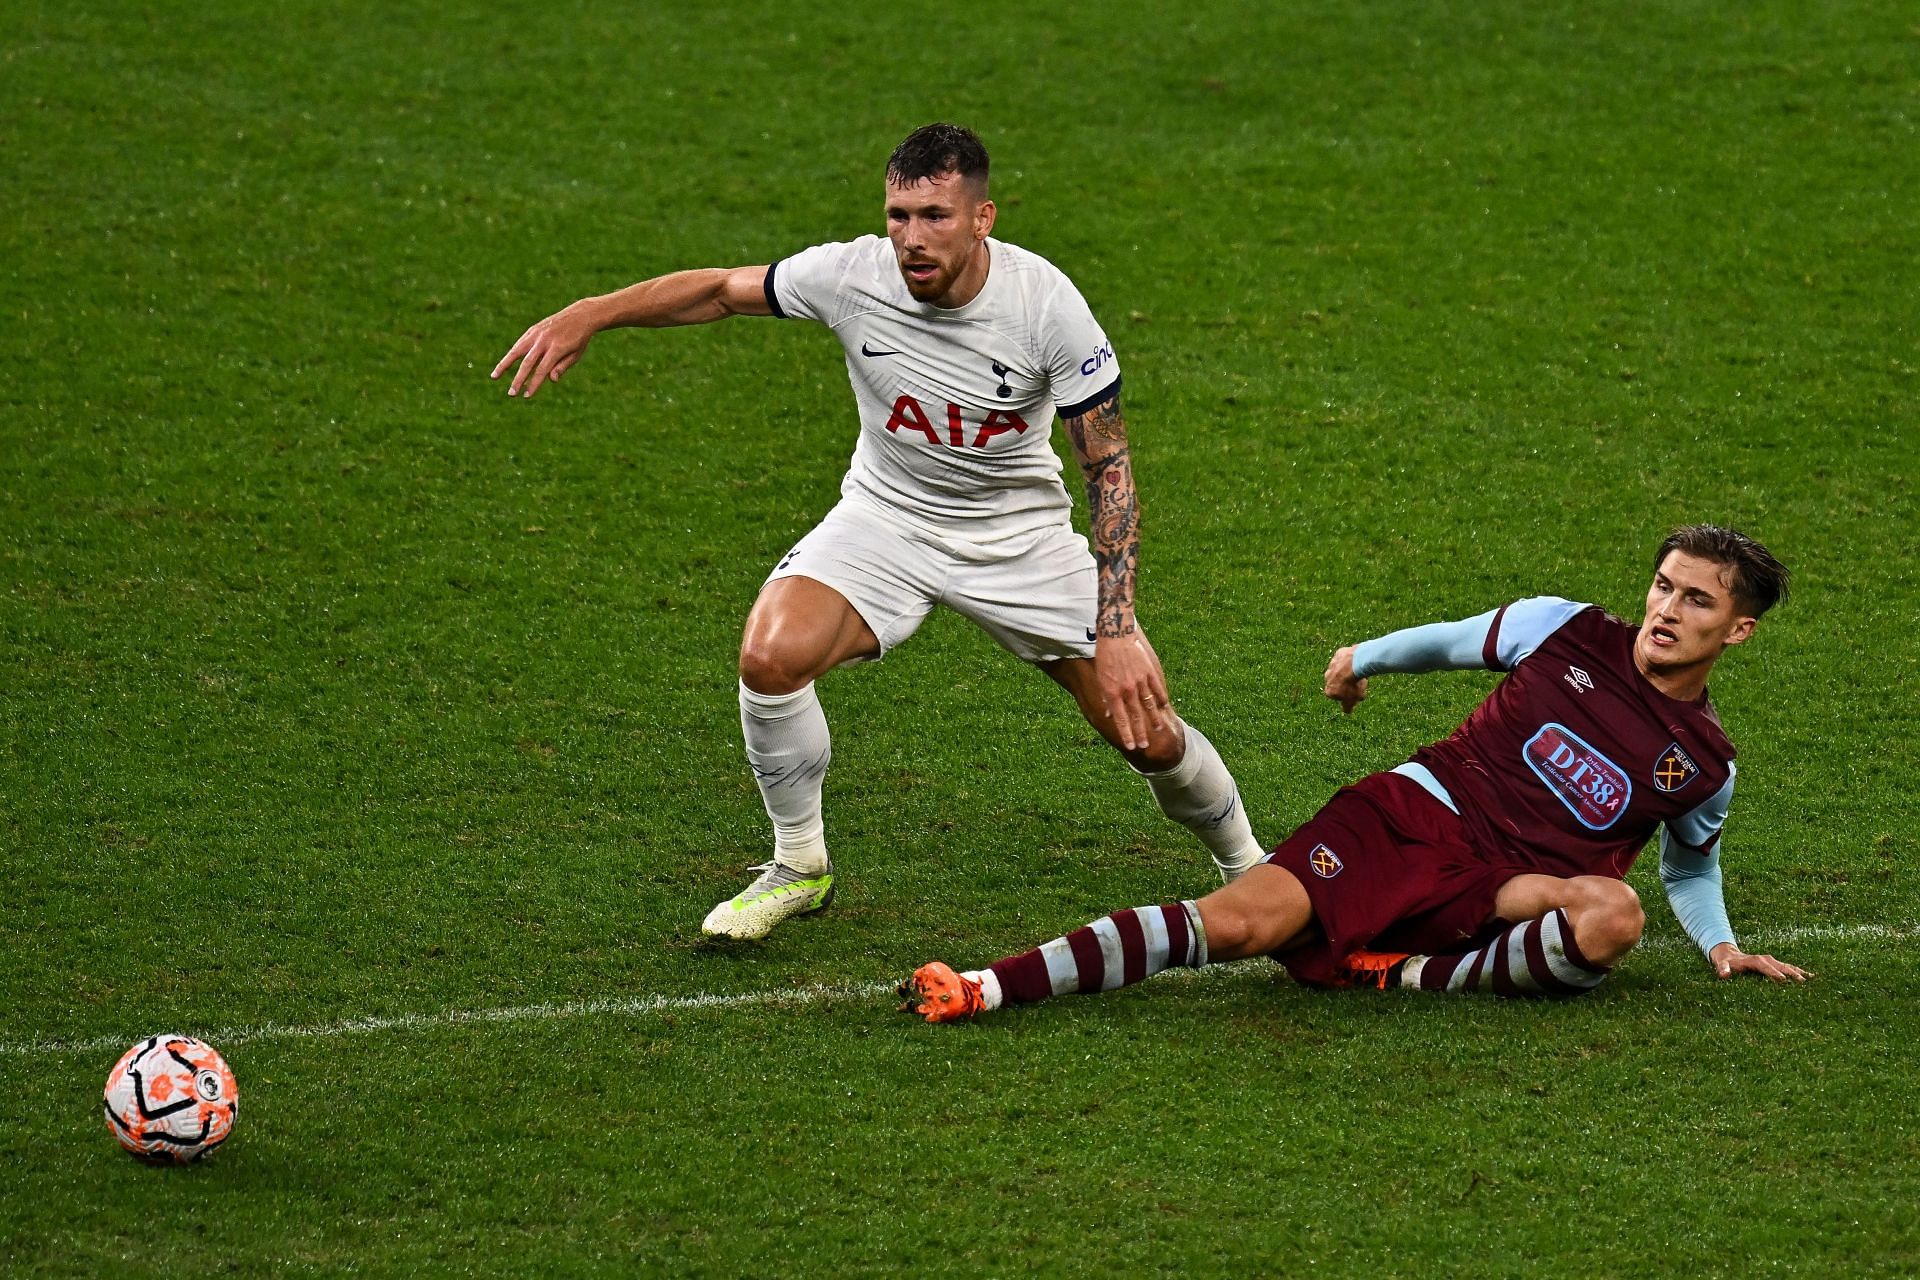 Pierre-Emile Hojbjerg for Tottenham Hotspur (via Getty Images)